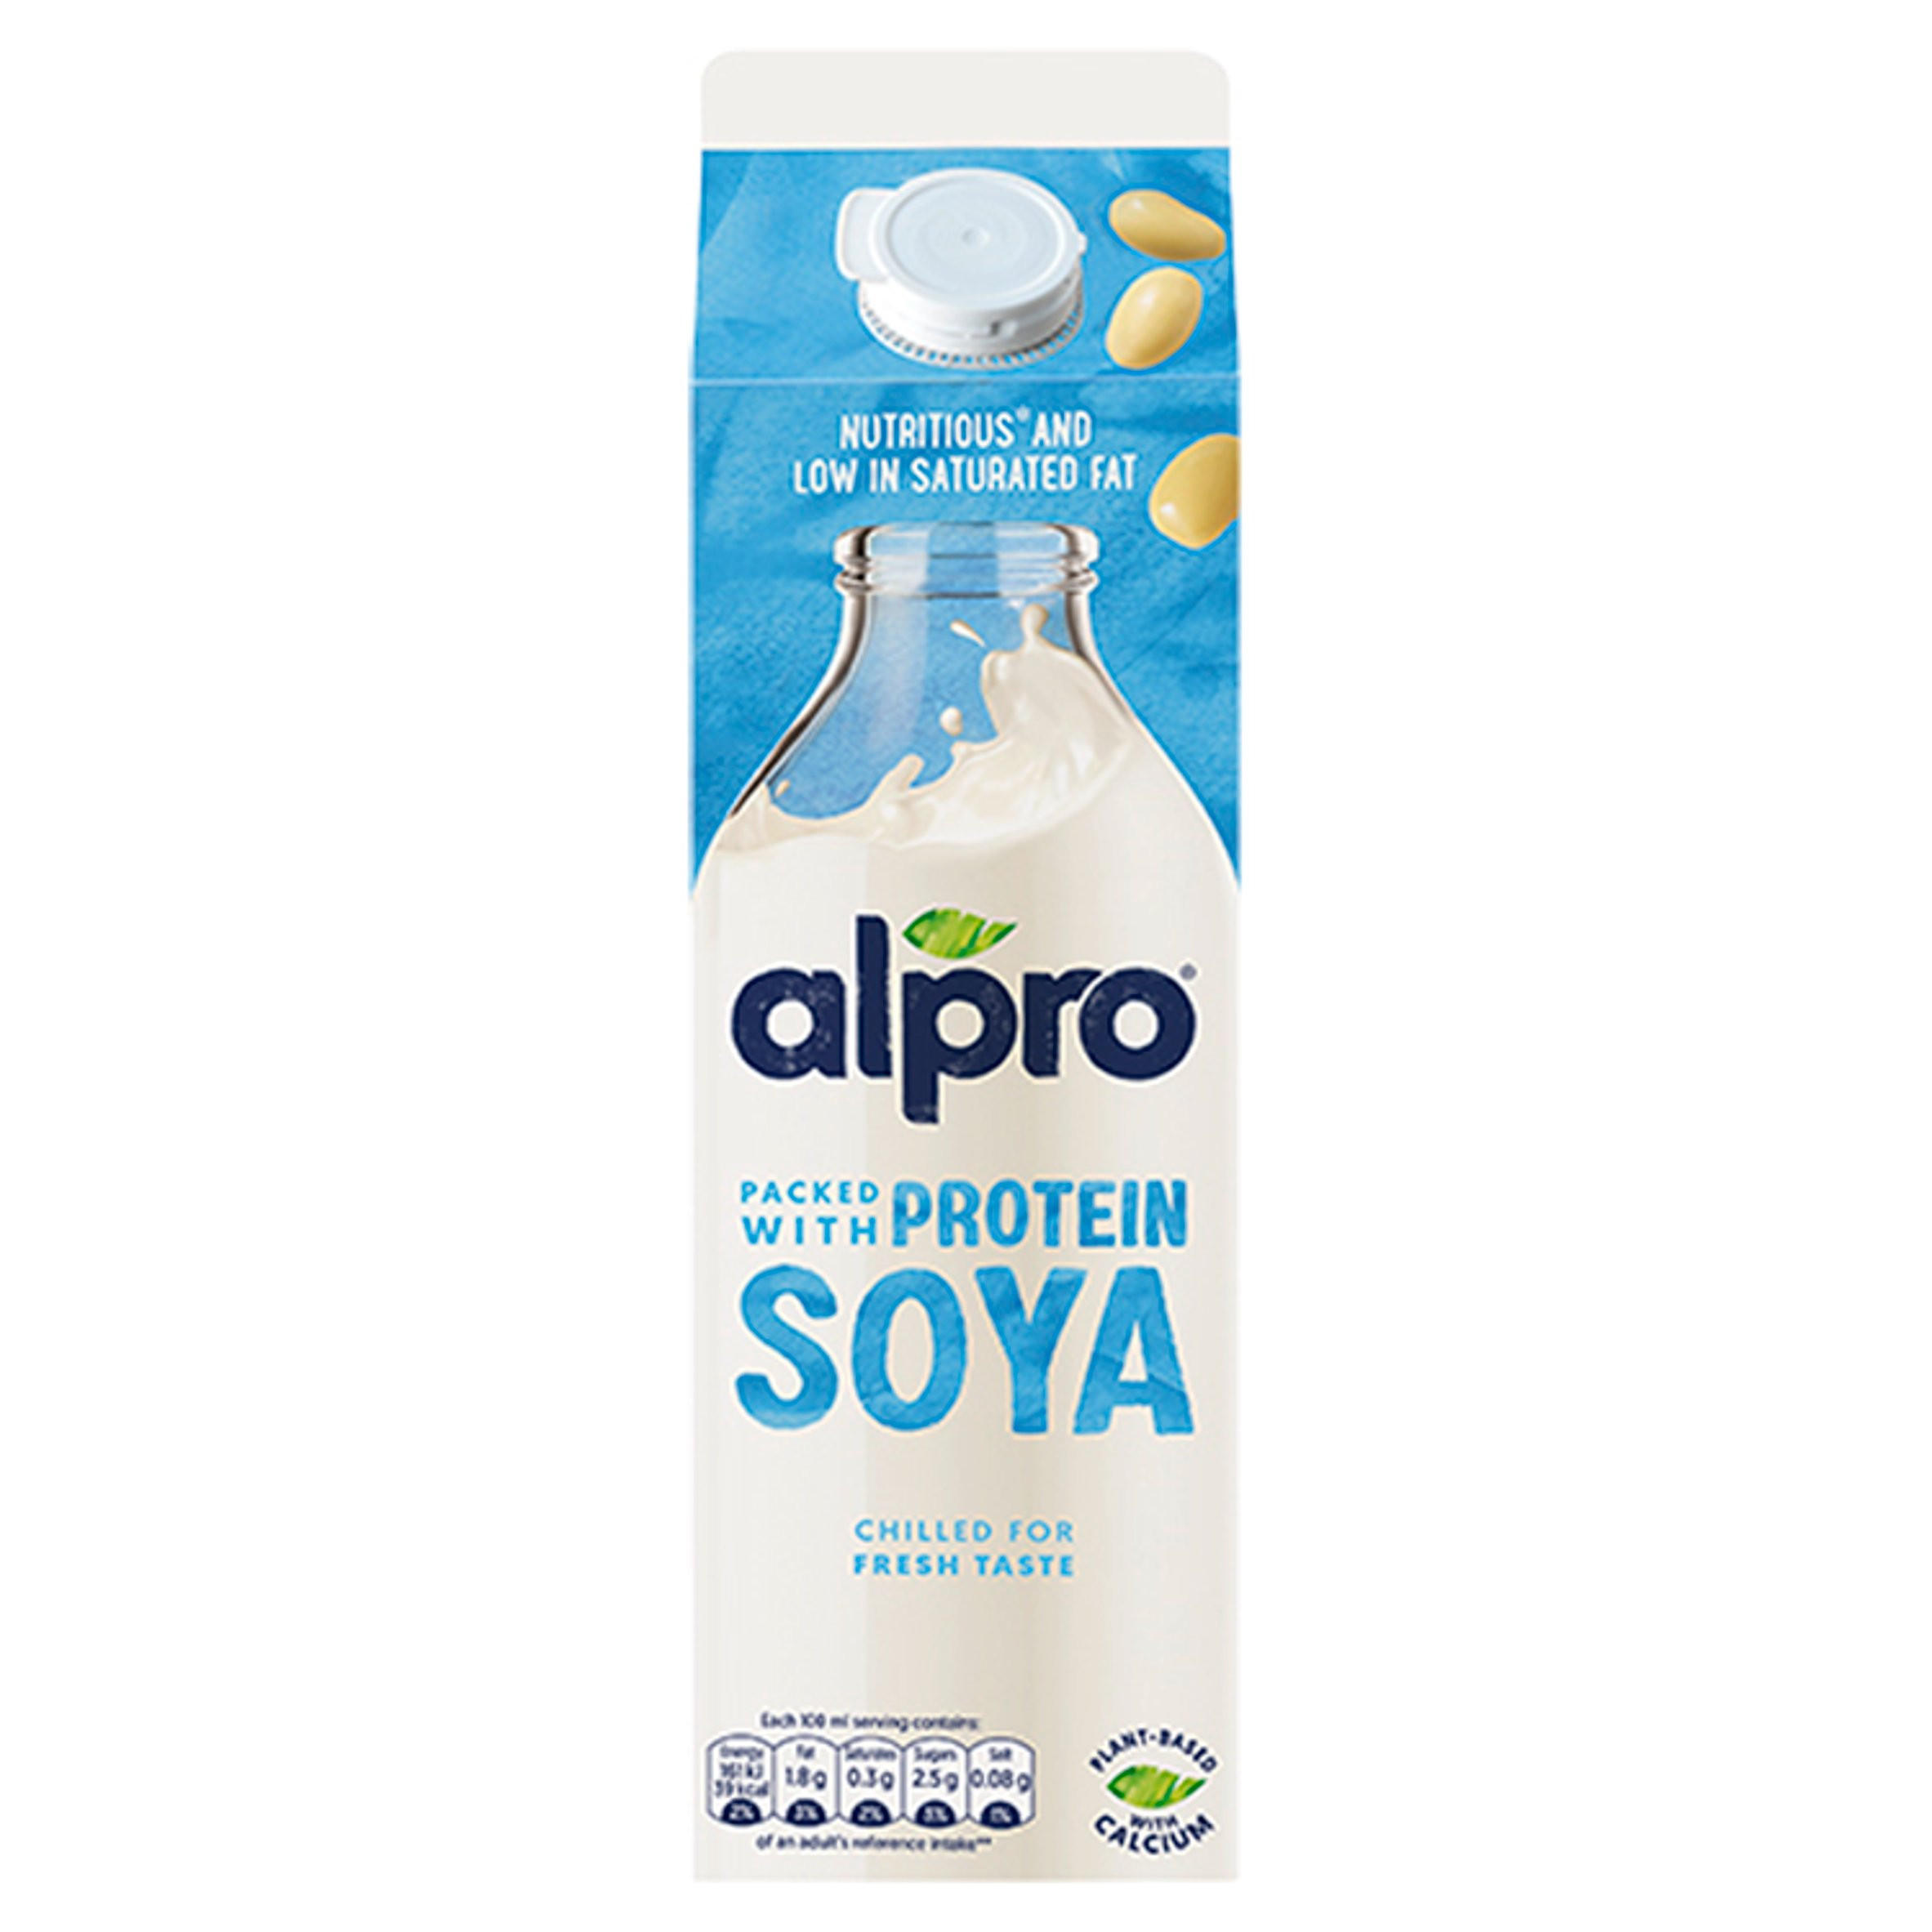 Alpro Packed with Protein Soya 1L, Milk, alpro proteine - okgo.net